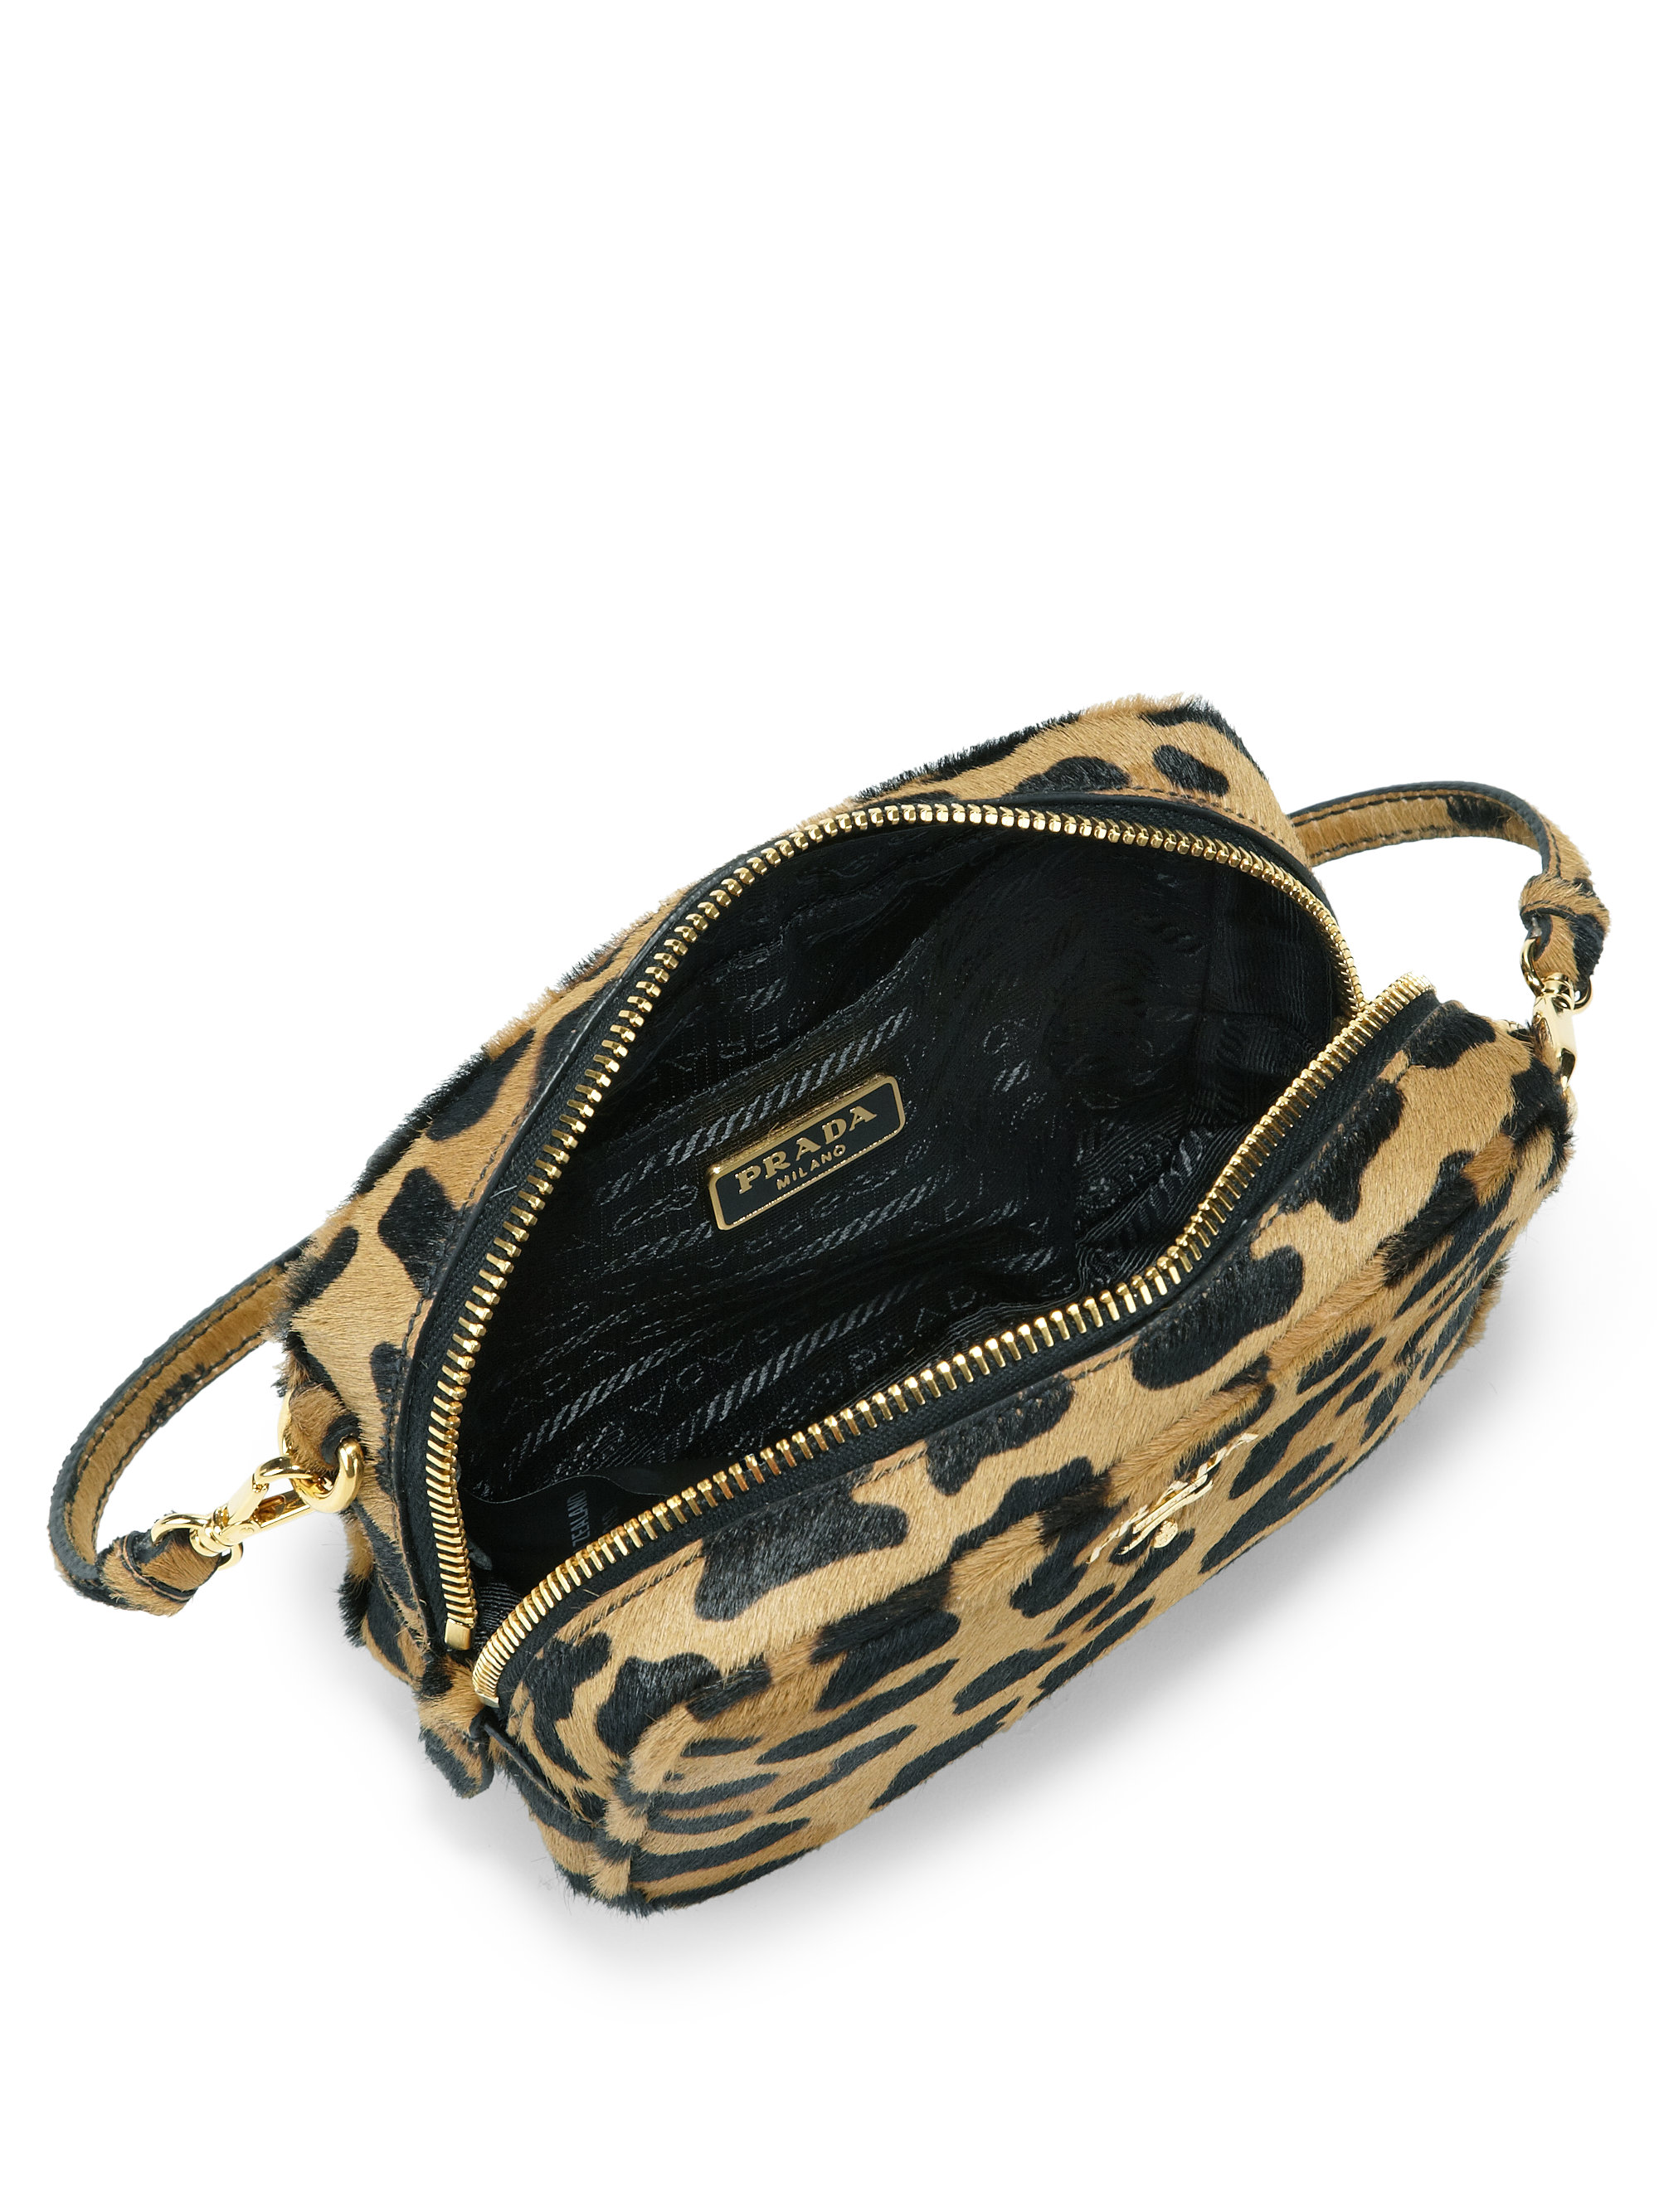 prada messenger nylon bag - Prada Cavallino Camera Bag in Animal (LEOPARD) | Lyst